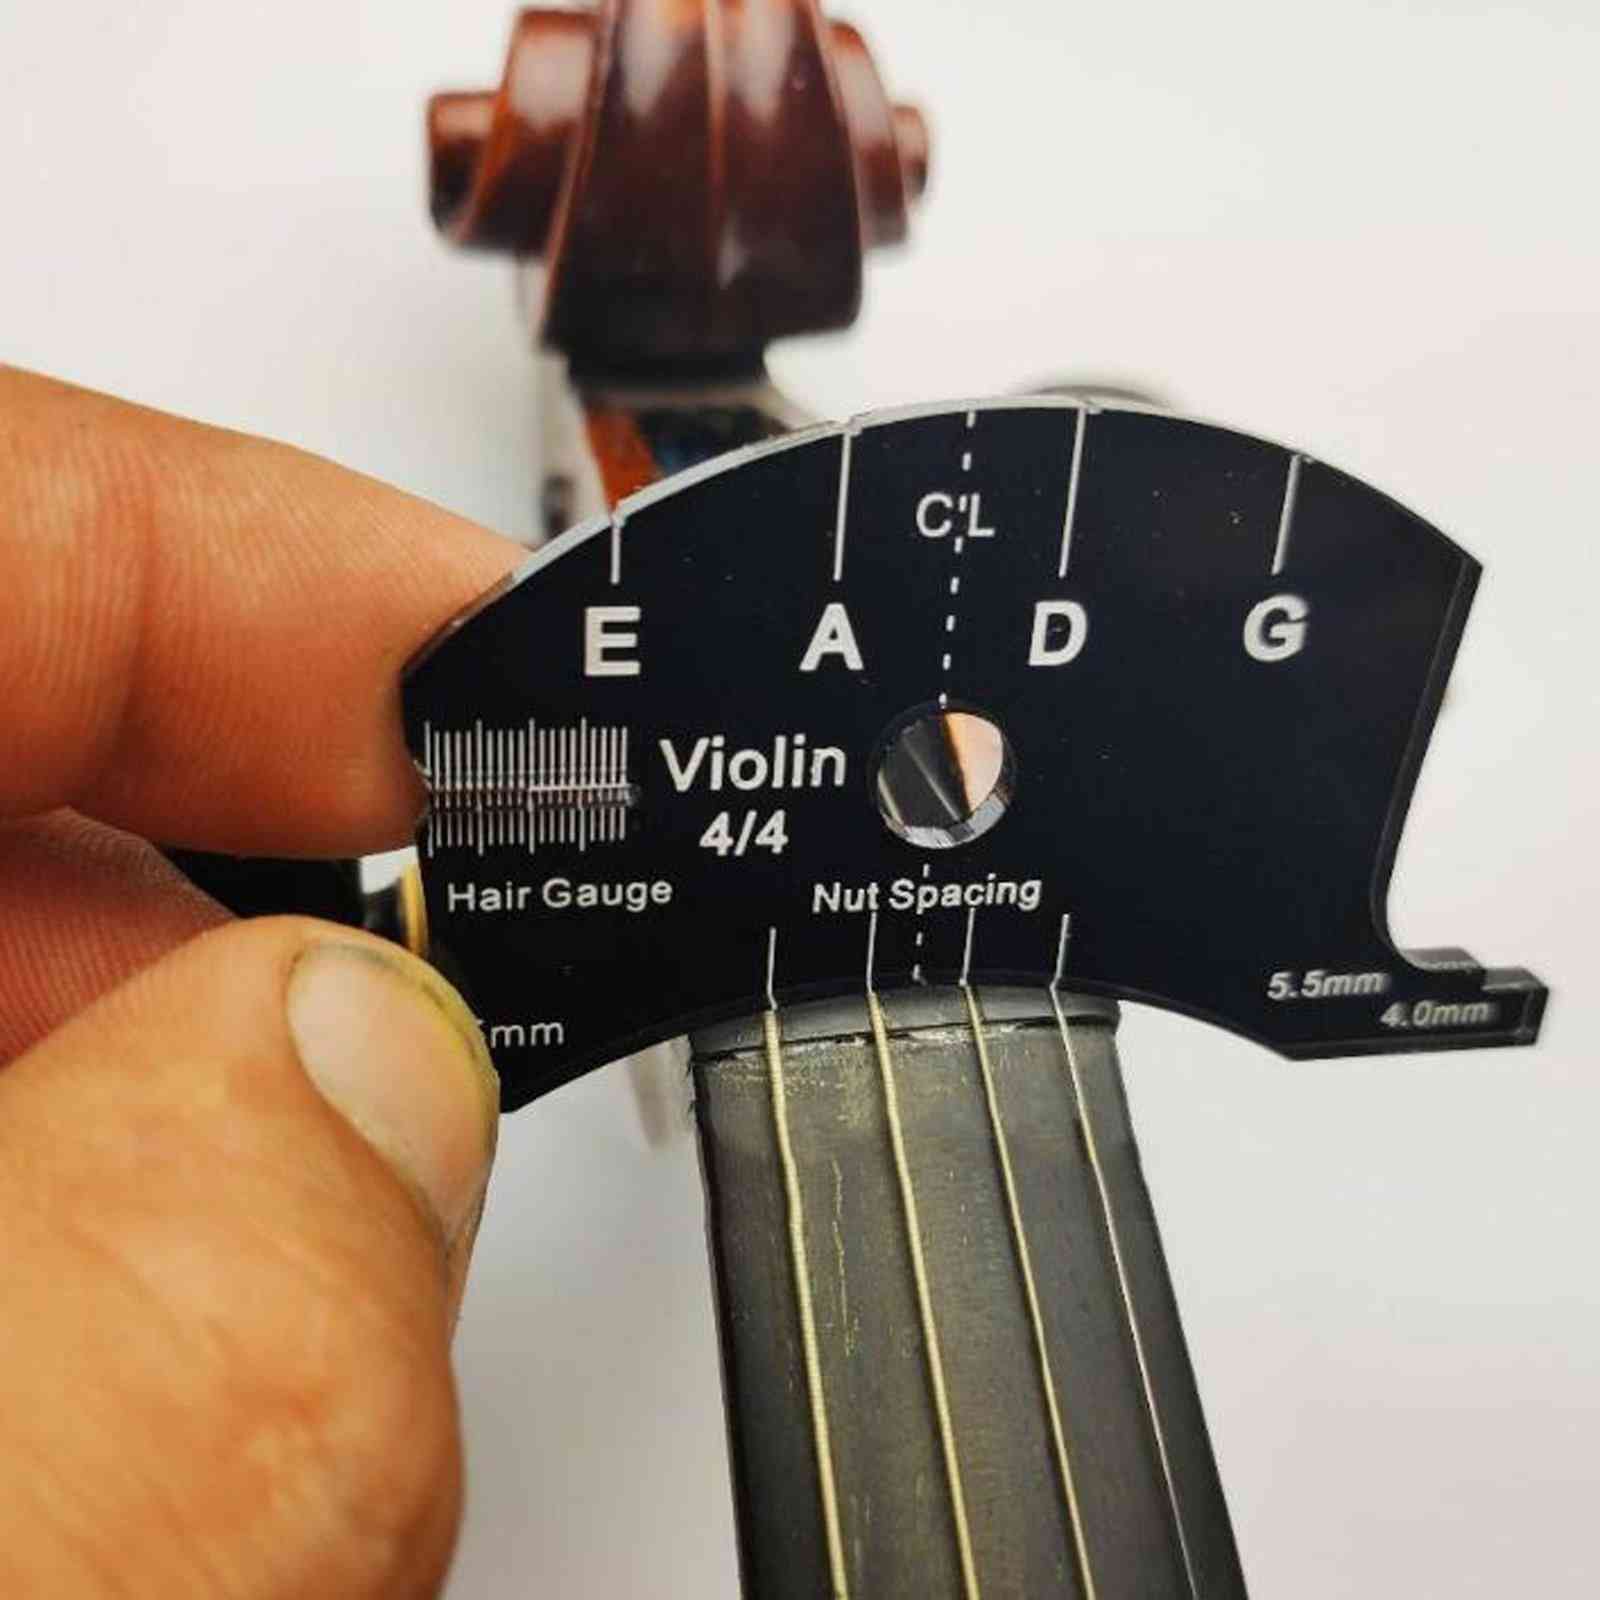 Violinski mostovi, šablona za plesni 1-4 violinski mostovi